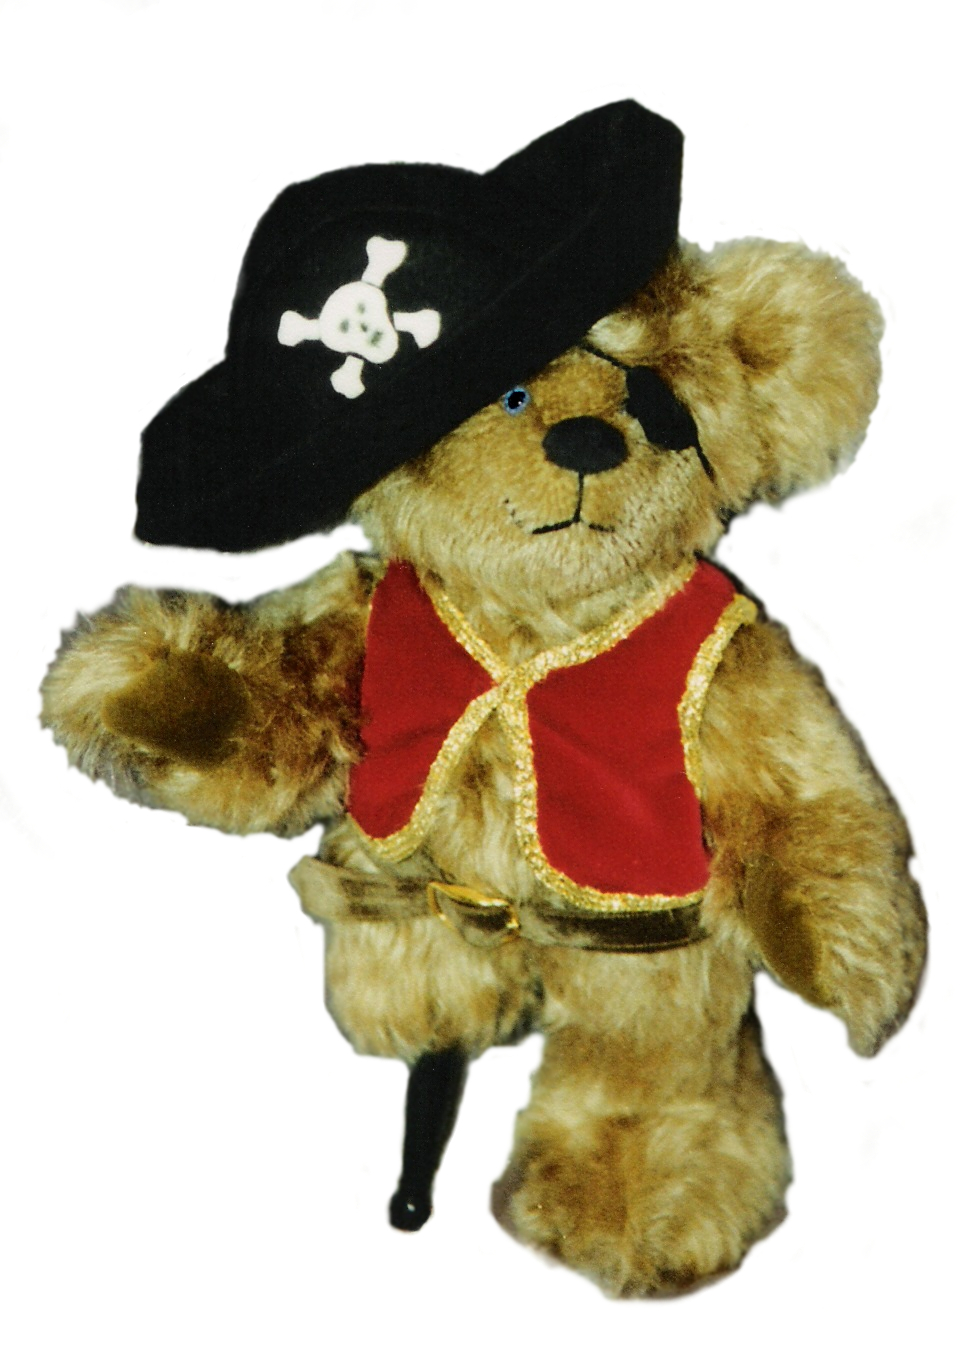 Teddy Simon als Pirat